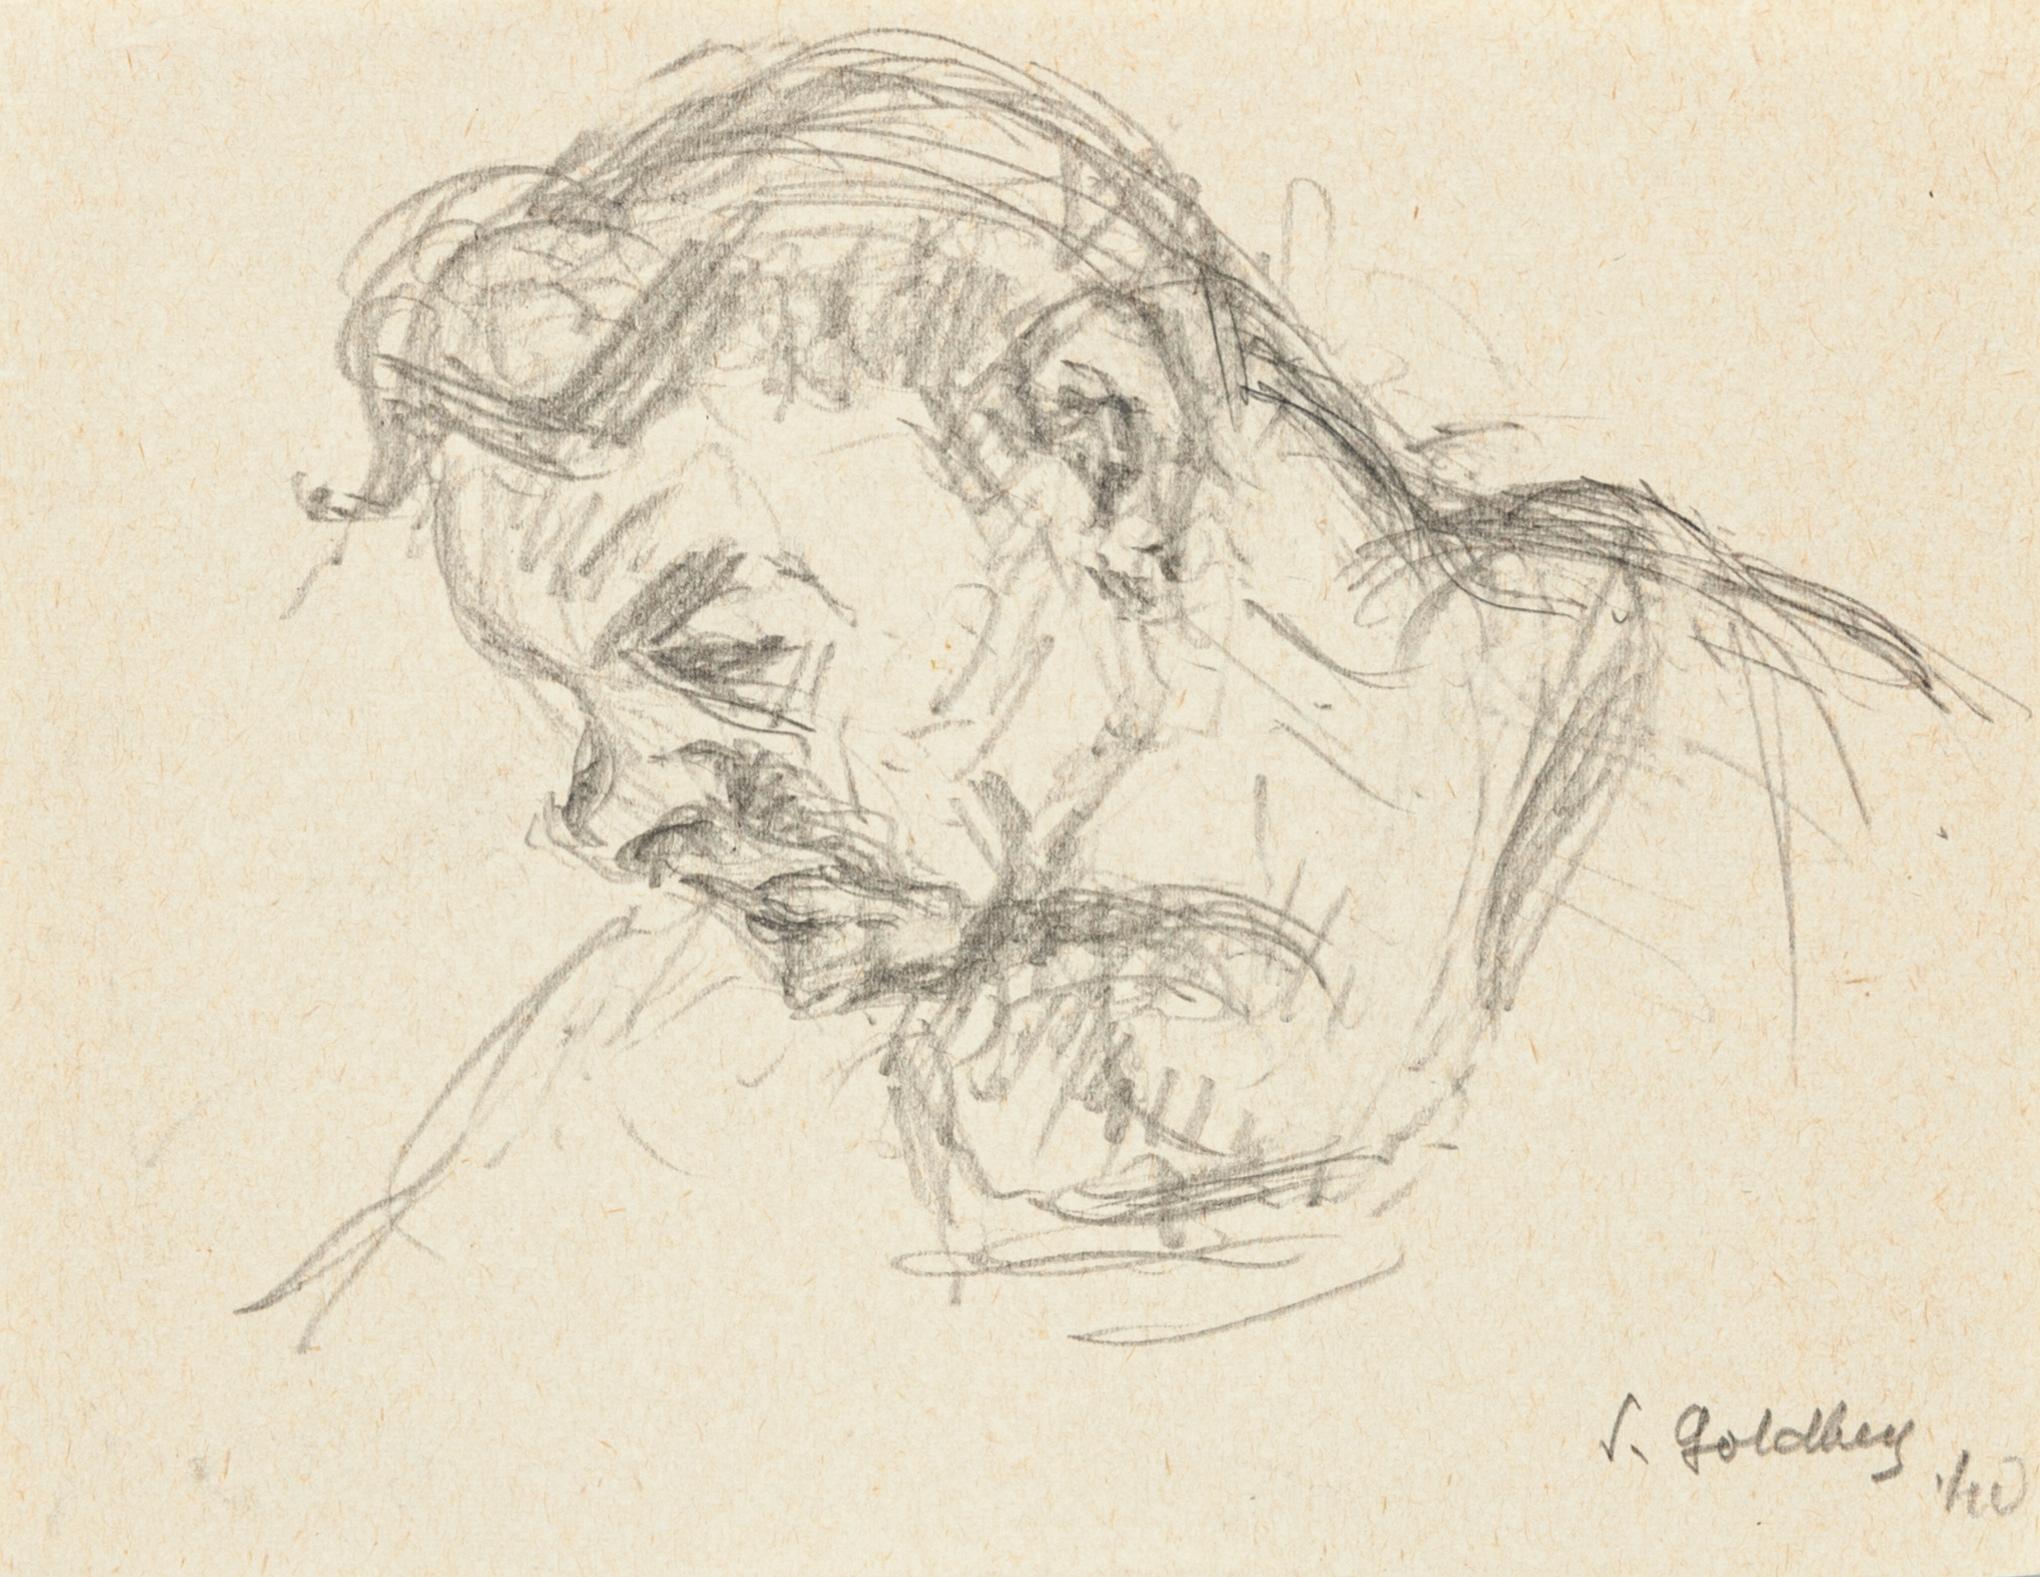 Simon Goldberg Portrait - Gloom - Original Pencil Drawing by S. Goldberg - 1940